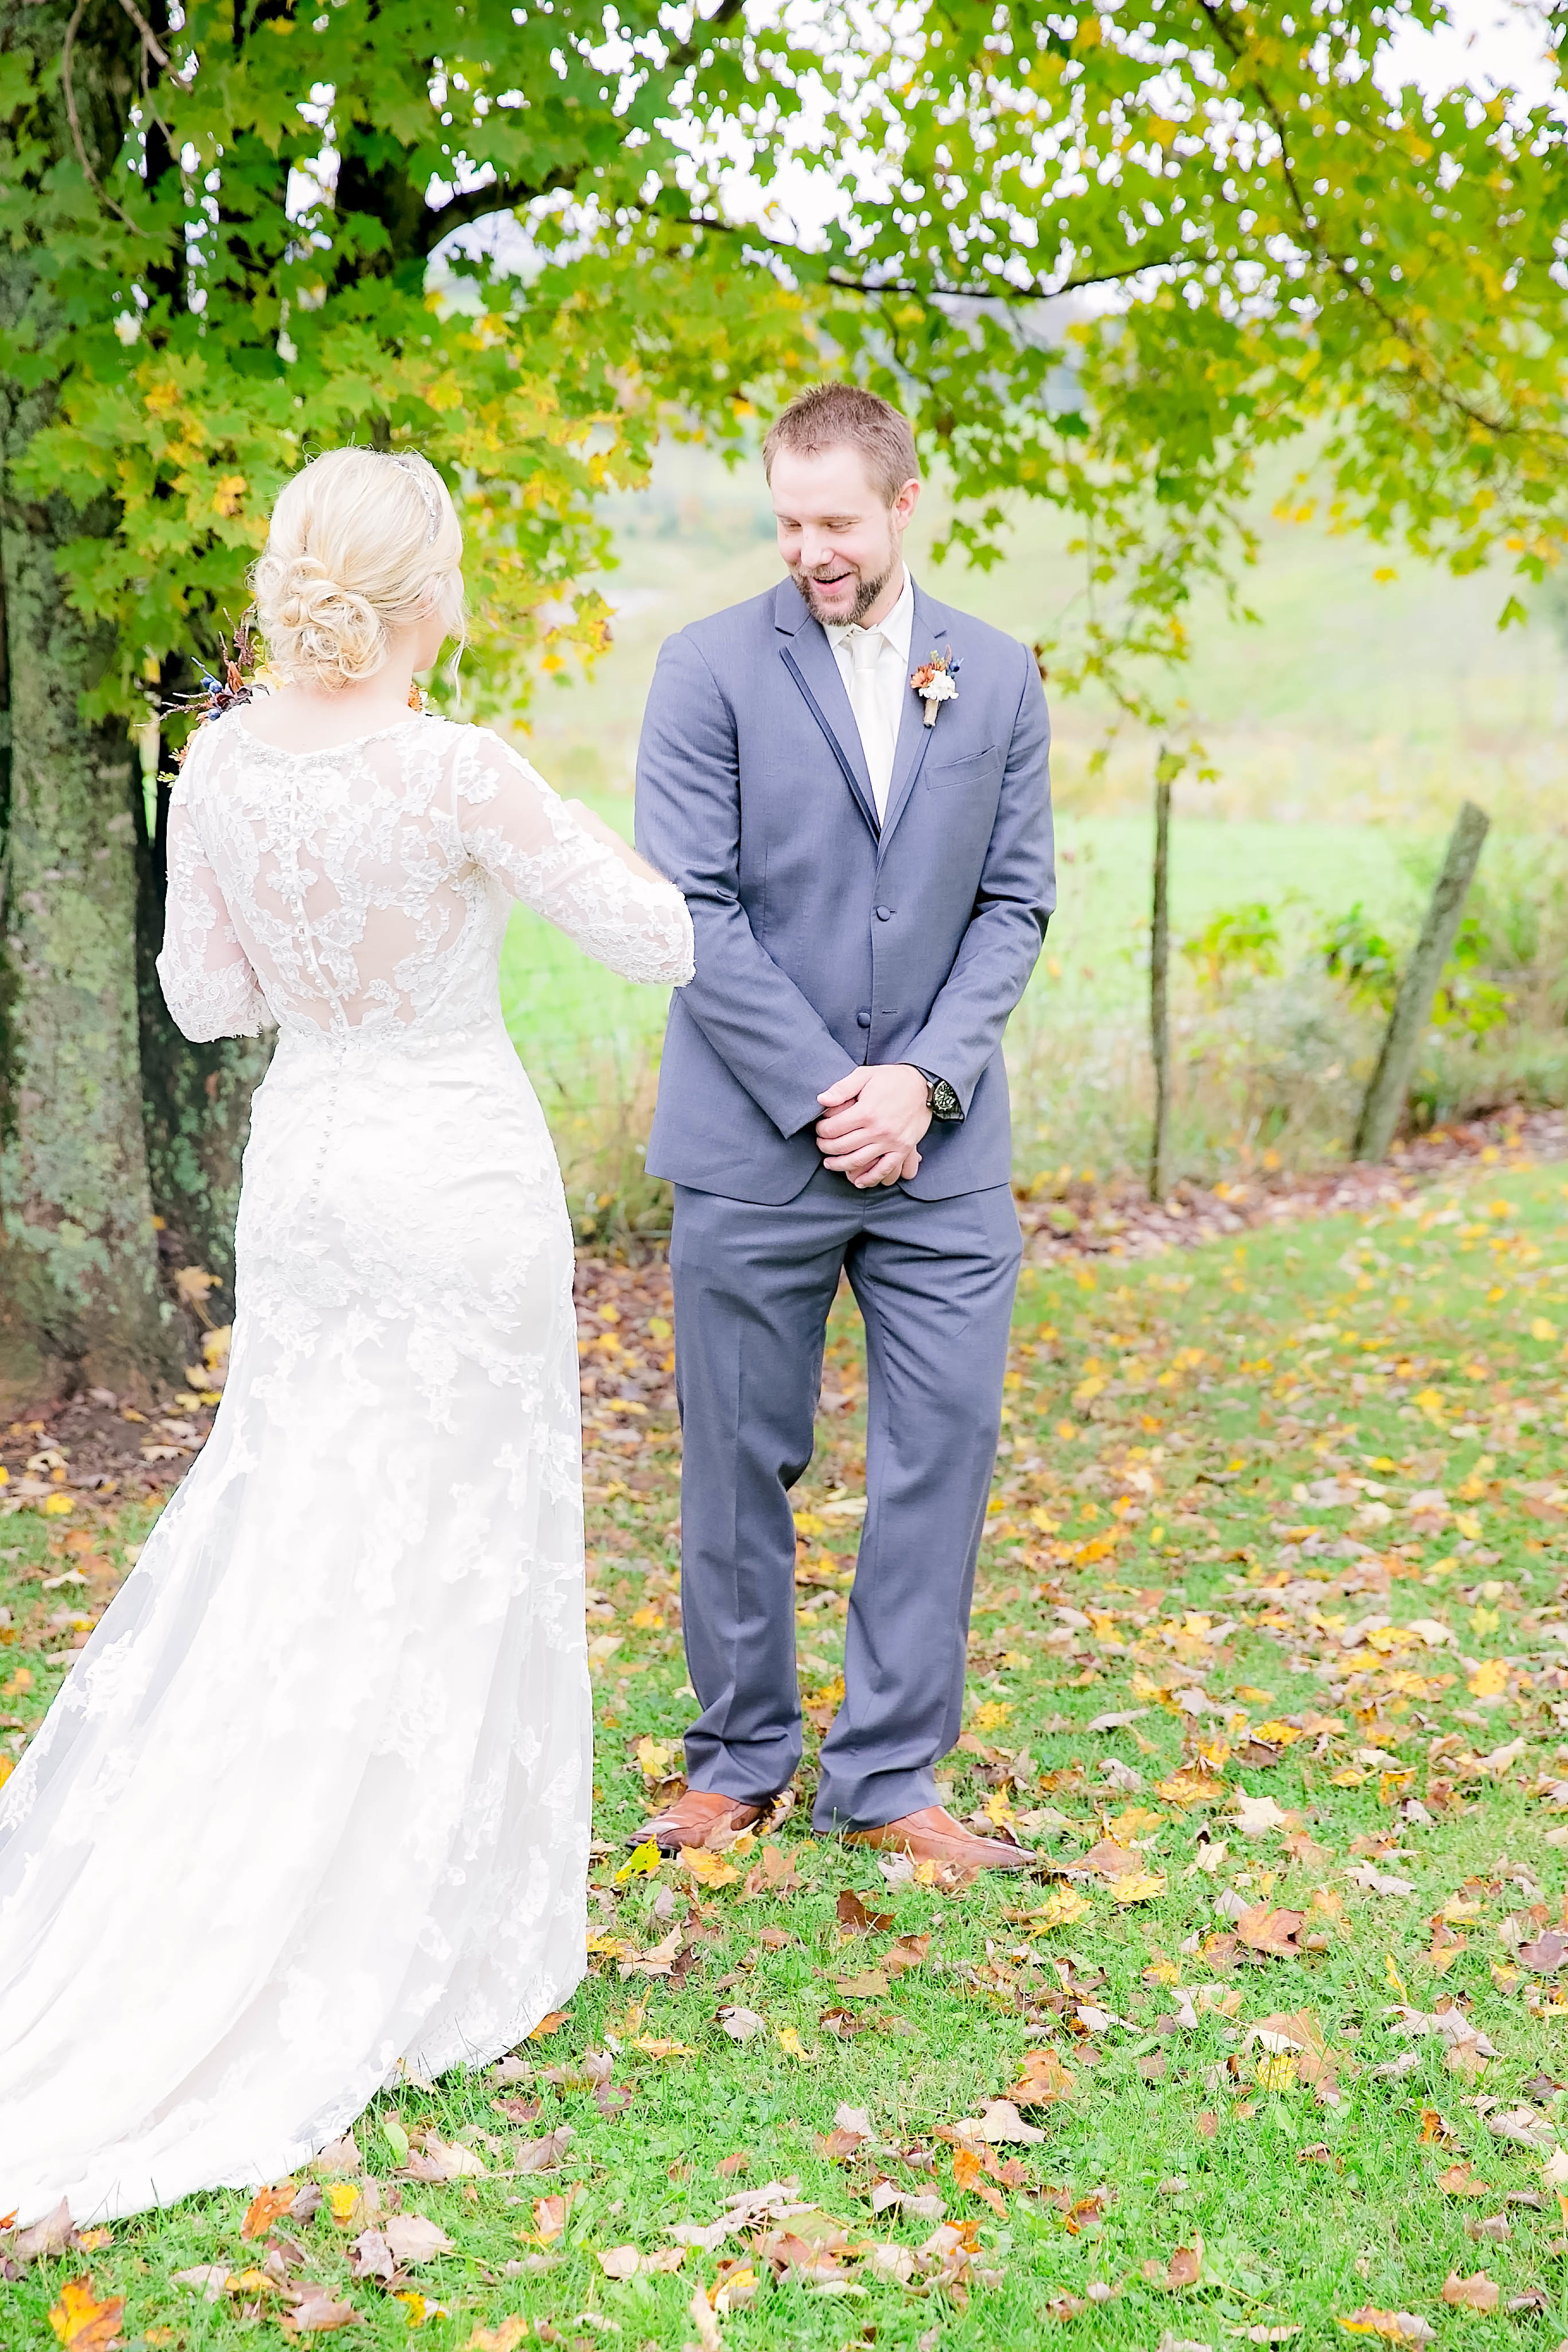 Mountain City, TN farm wedding, East Tennessee fall wedding, bride and groom first look